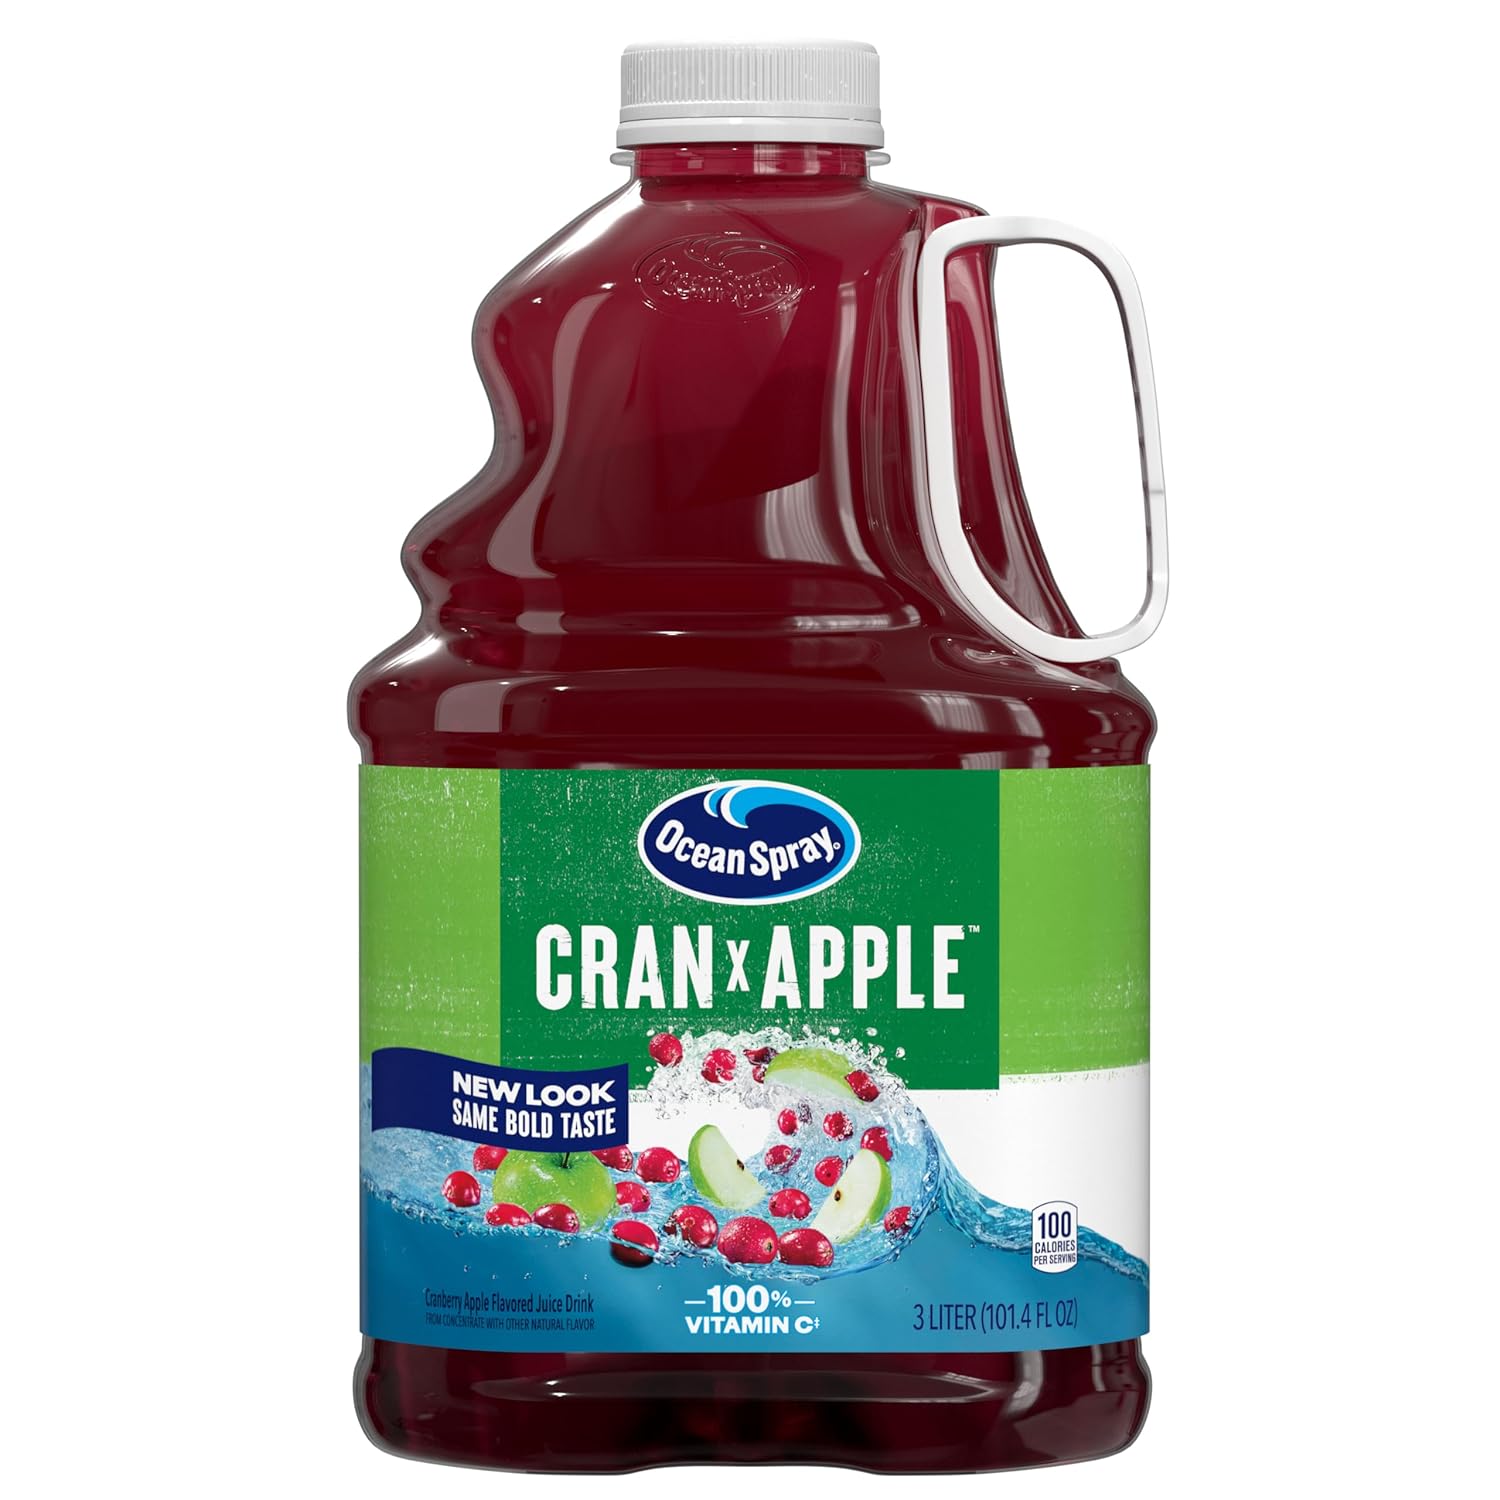 Ocean Spray® Cran-Apple™ Cranberry Apple Juice Drink, 101.4 Fl Oz Bottle (Pack of 1)